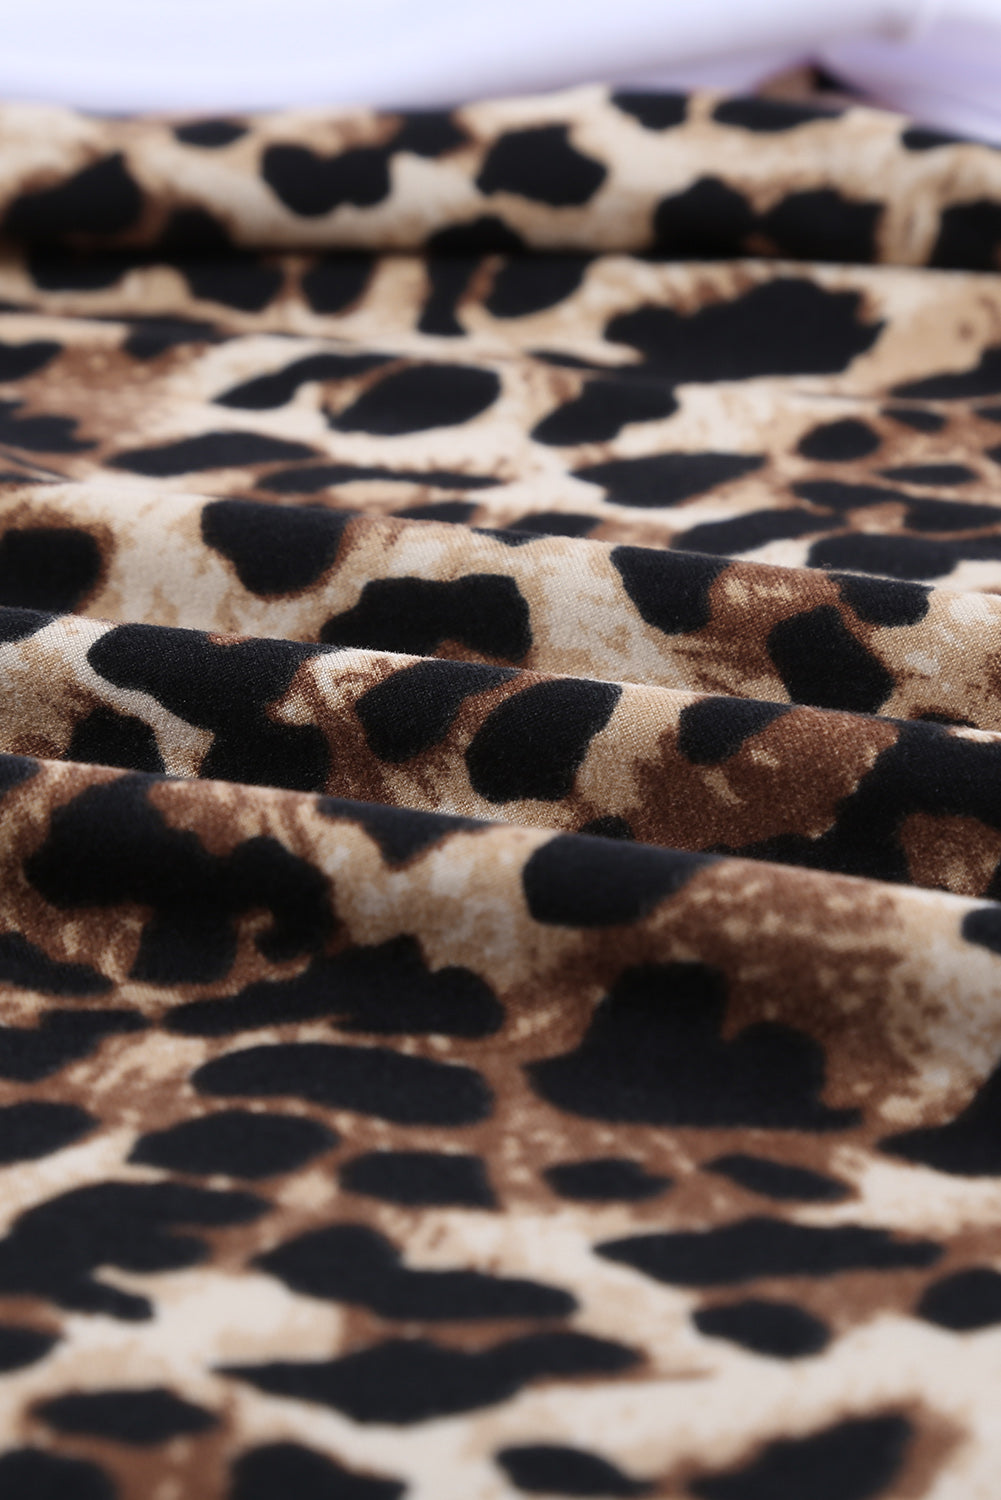 White Women's Leopard Printed Short Sleeve T-Shirt Blouse LC253578-1